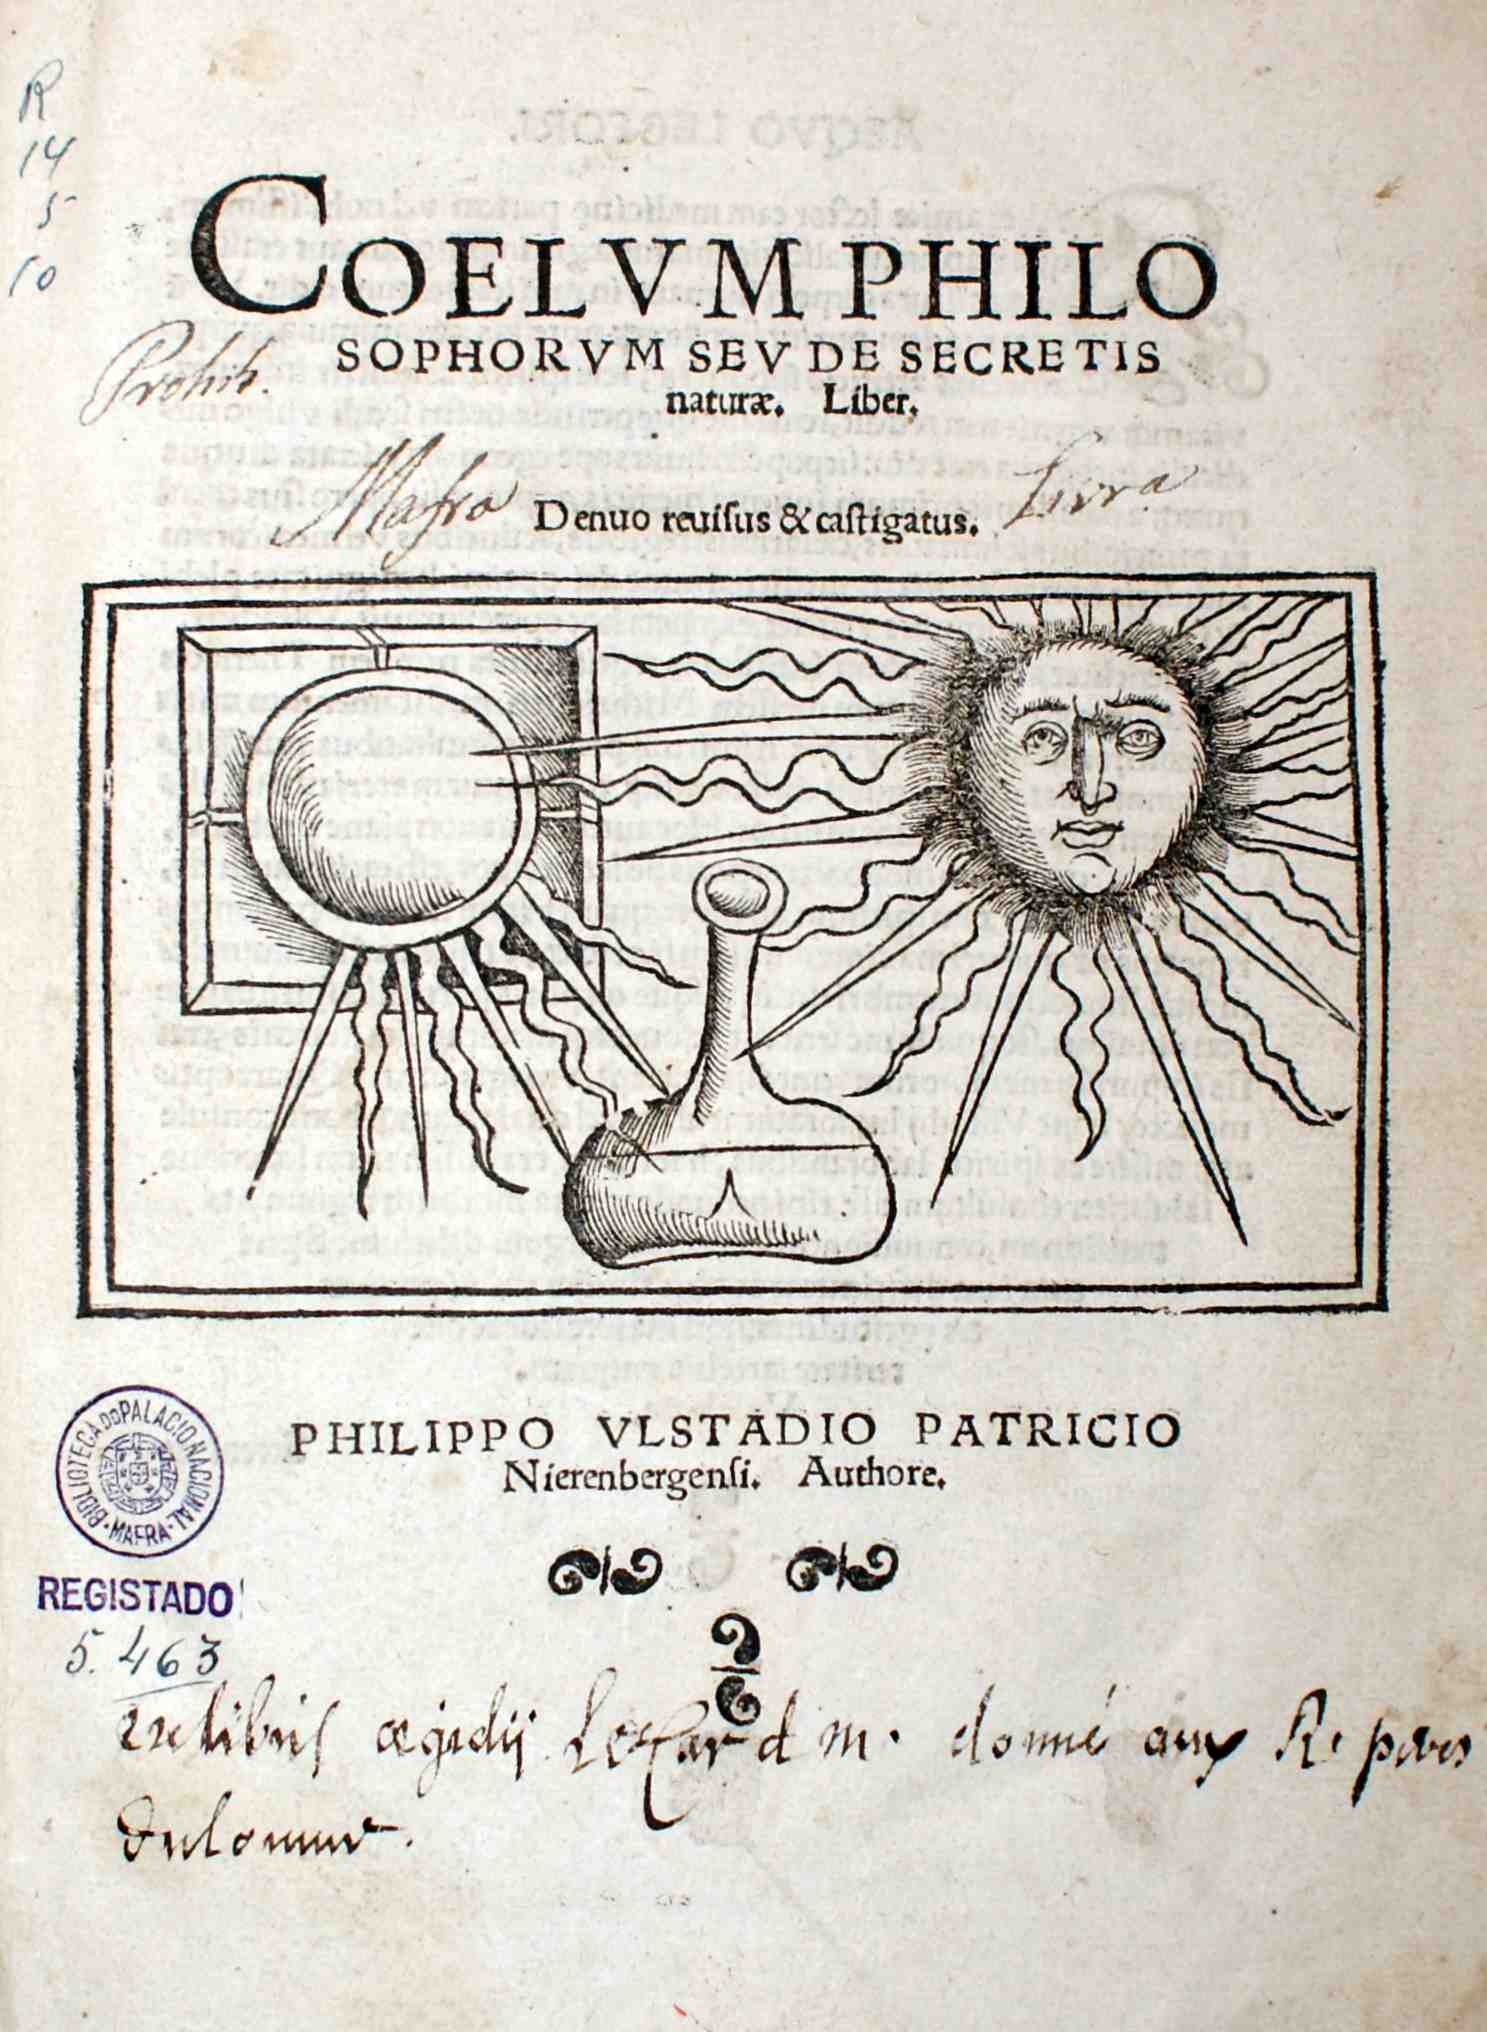 Coelvm philosophorvm... Philippo Vlstadio, 1525, Livro  proibido  (BPNM)